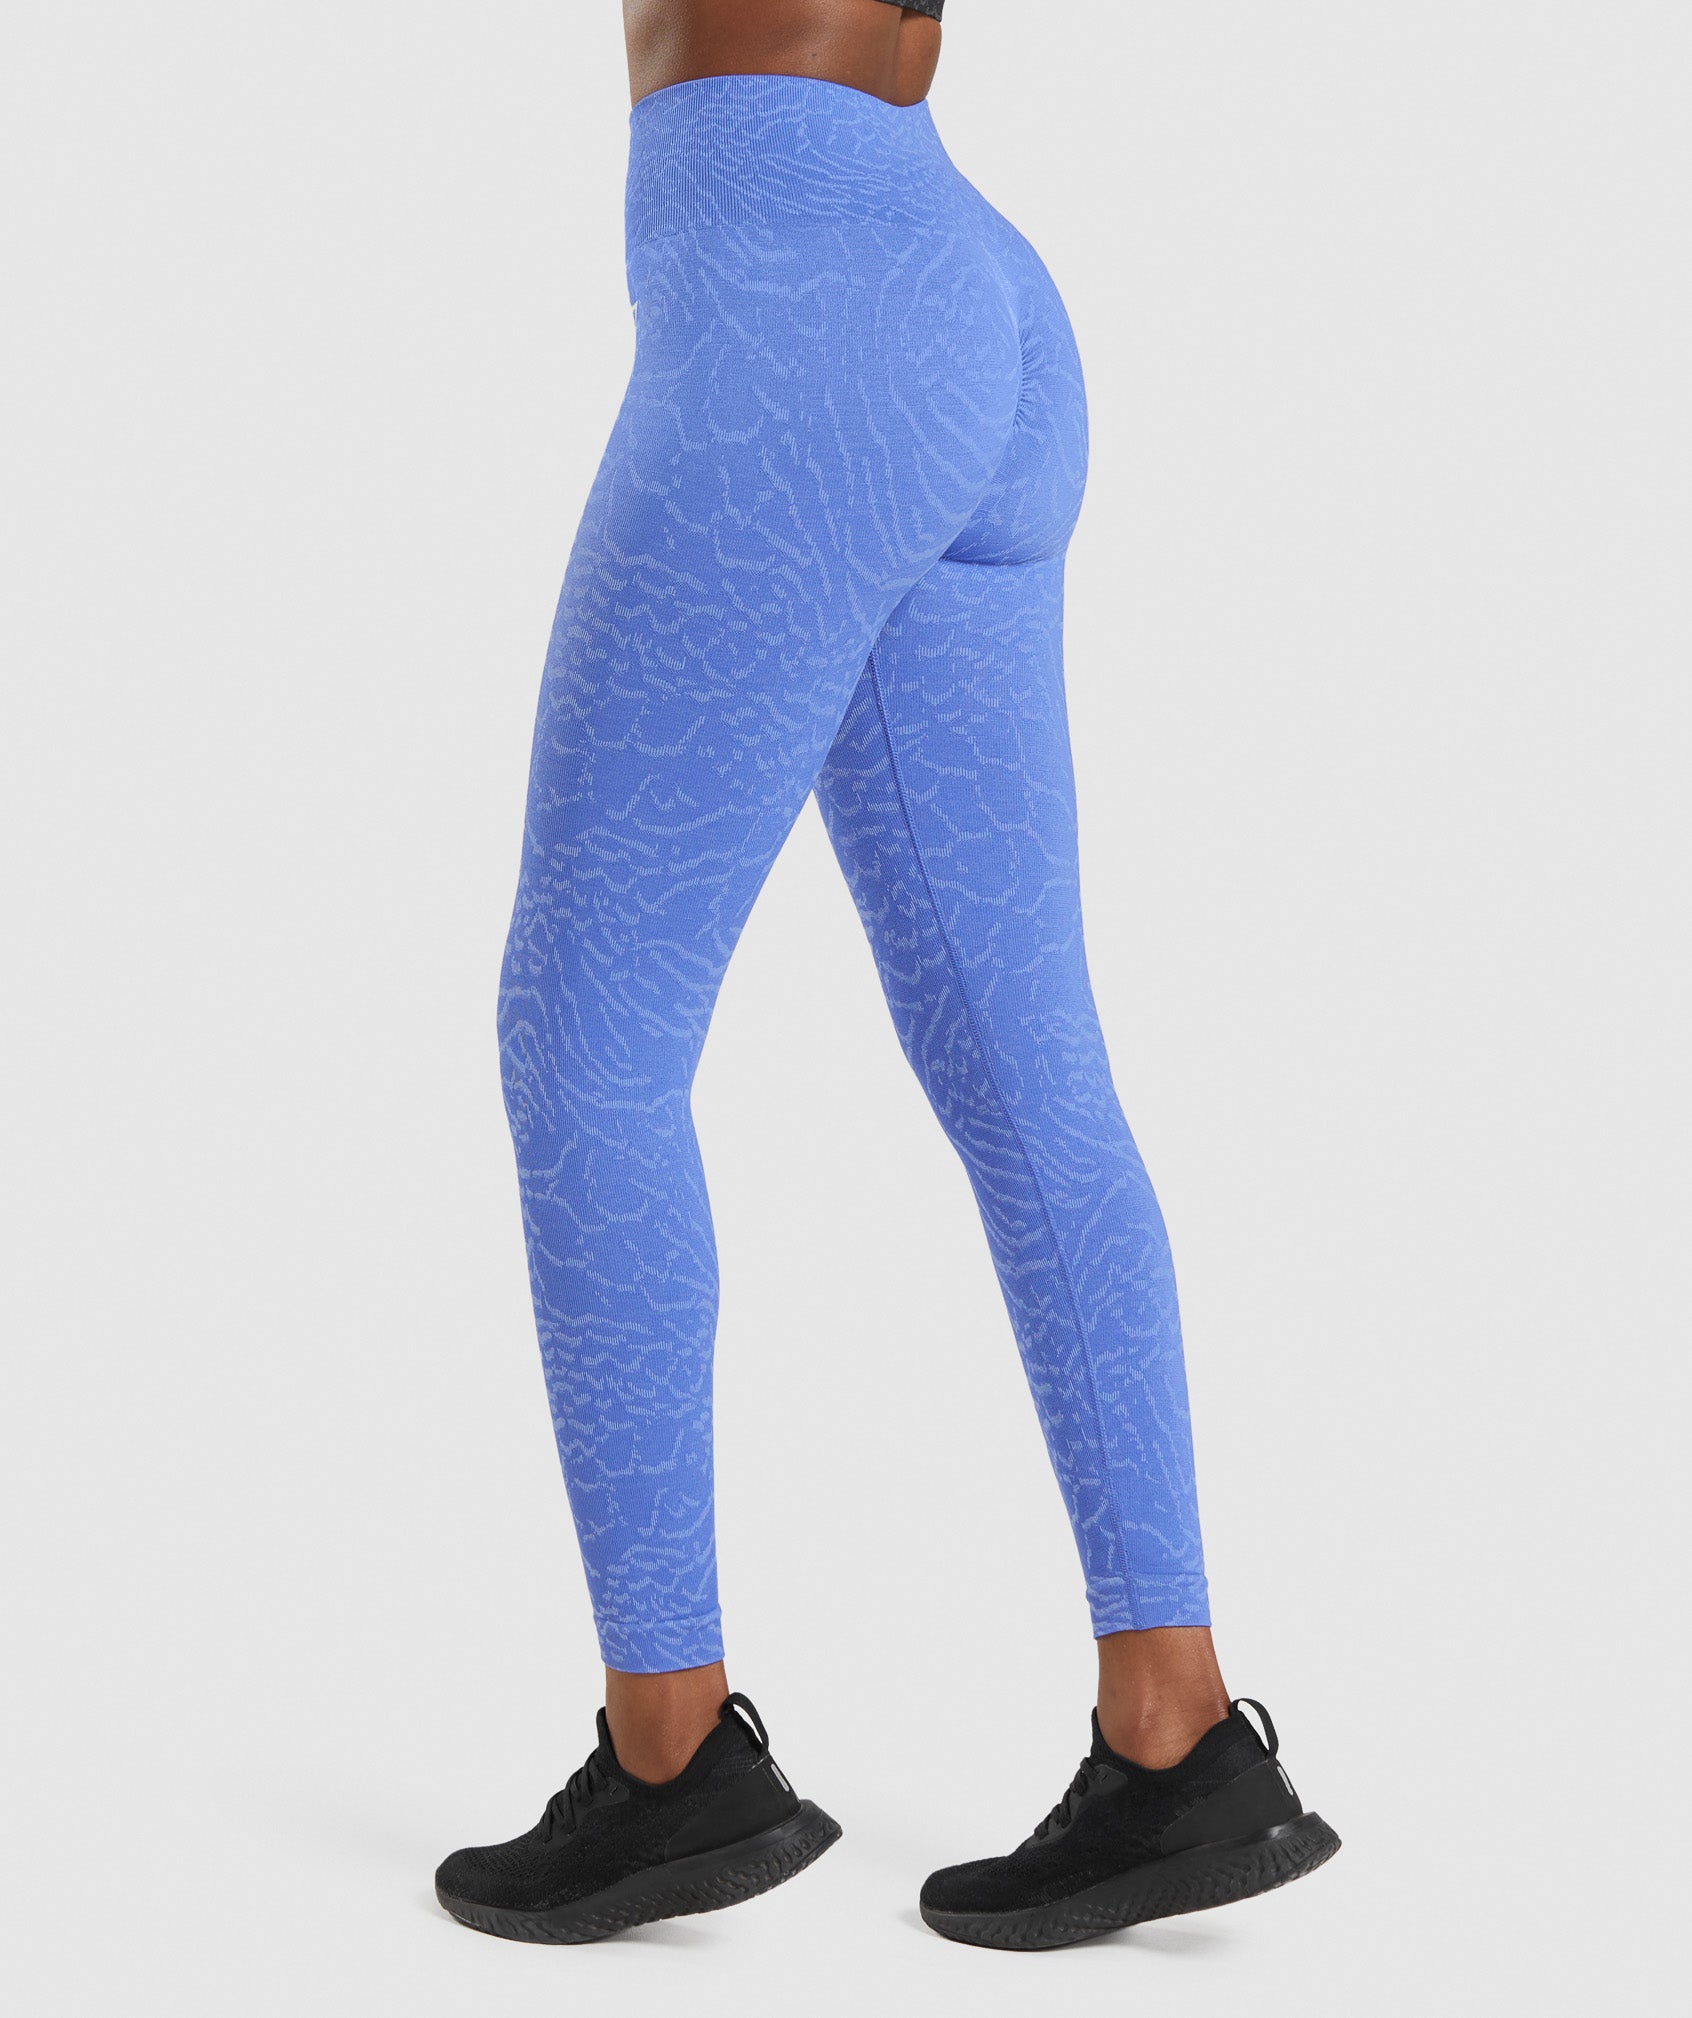 Women's Blue Workout Leggings